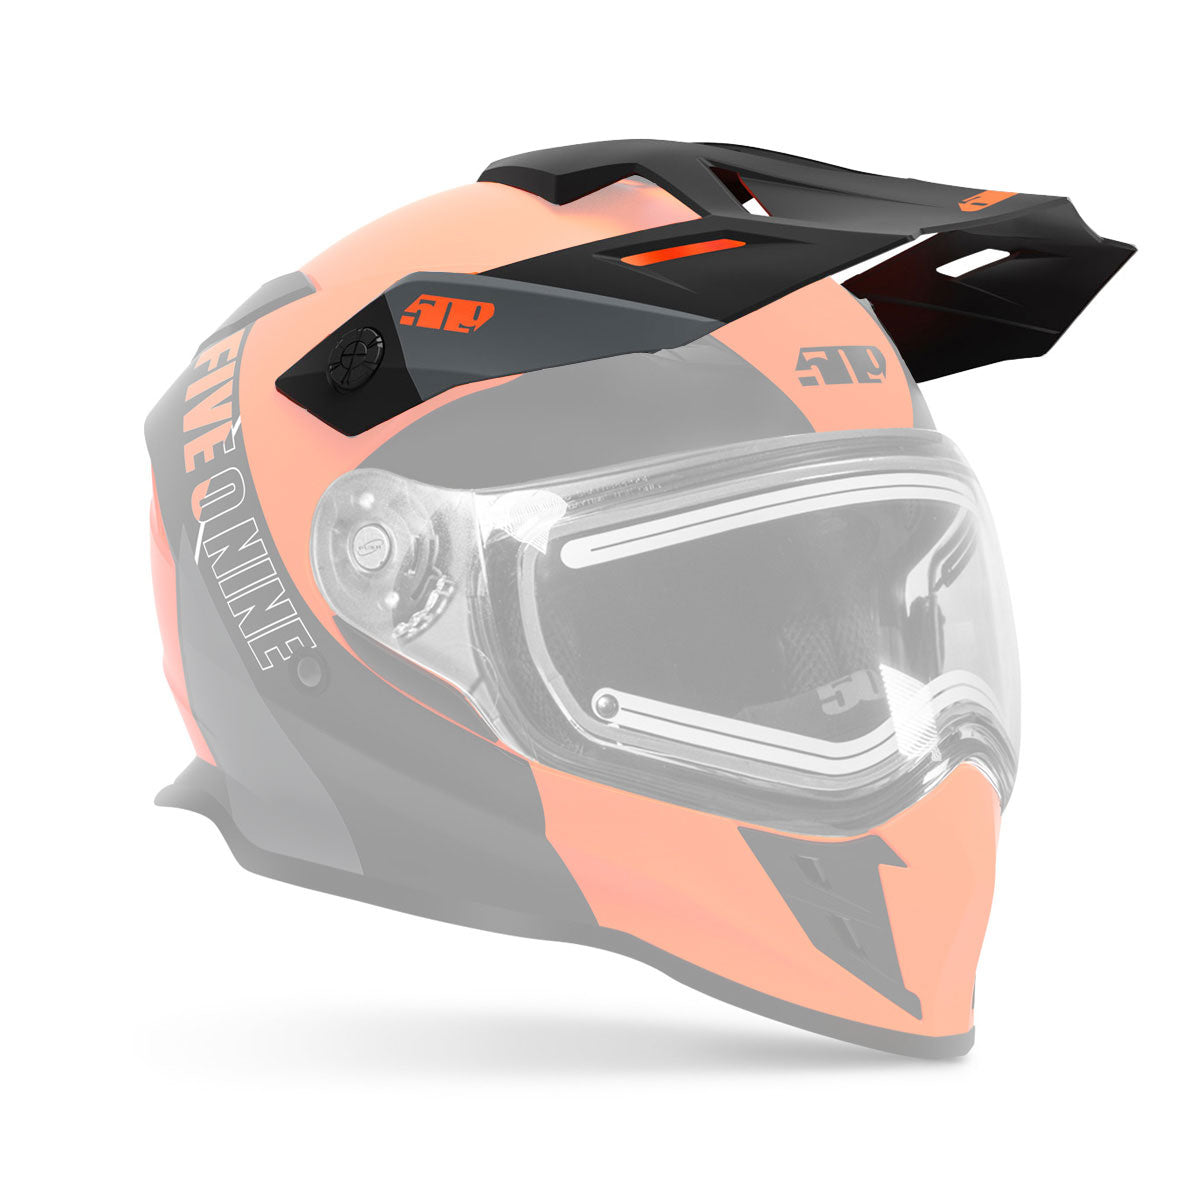 Visor for Delta R3 and R3L Helmets